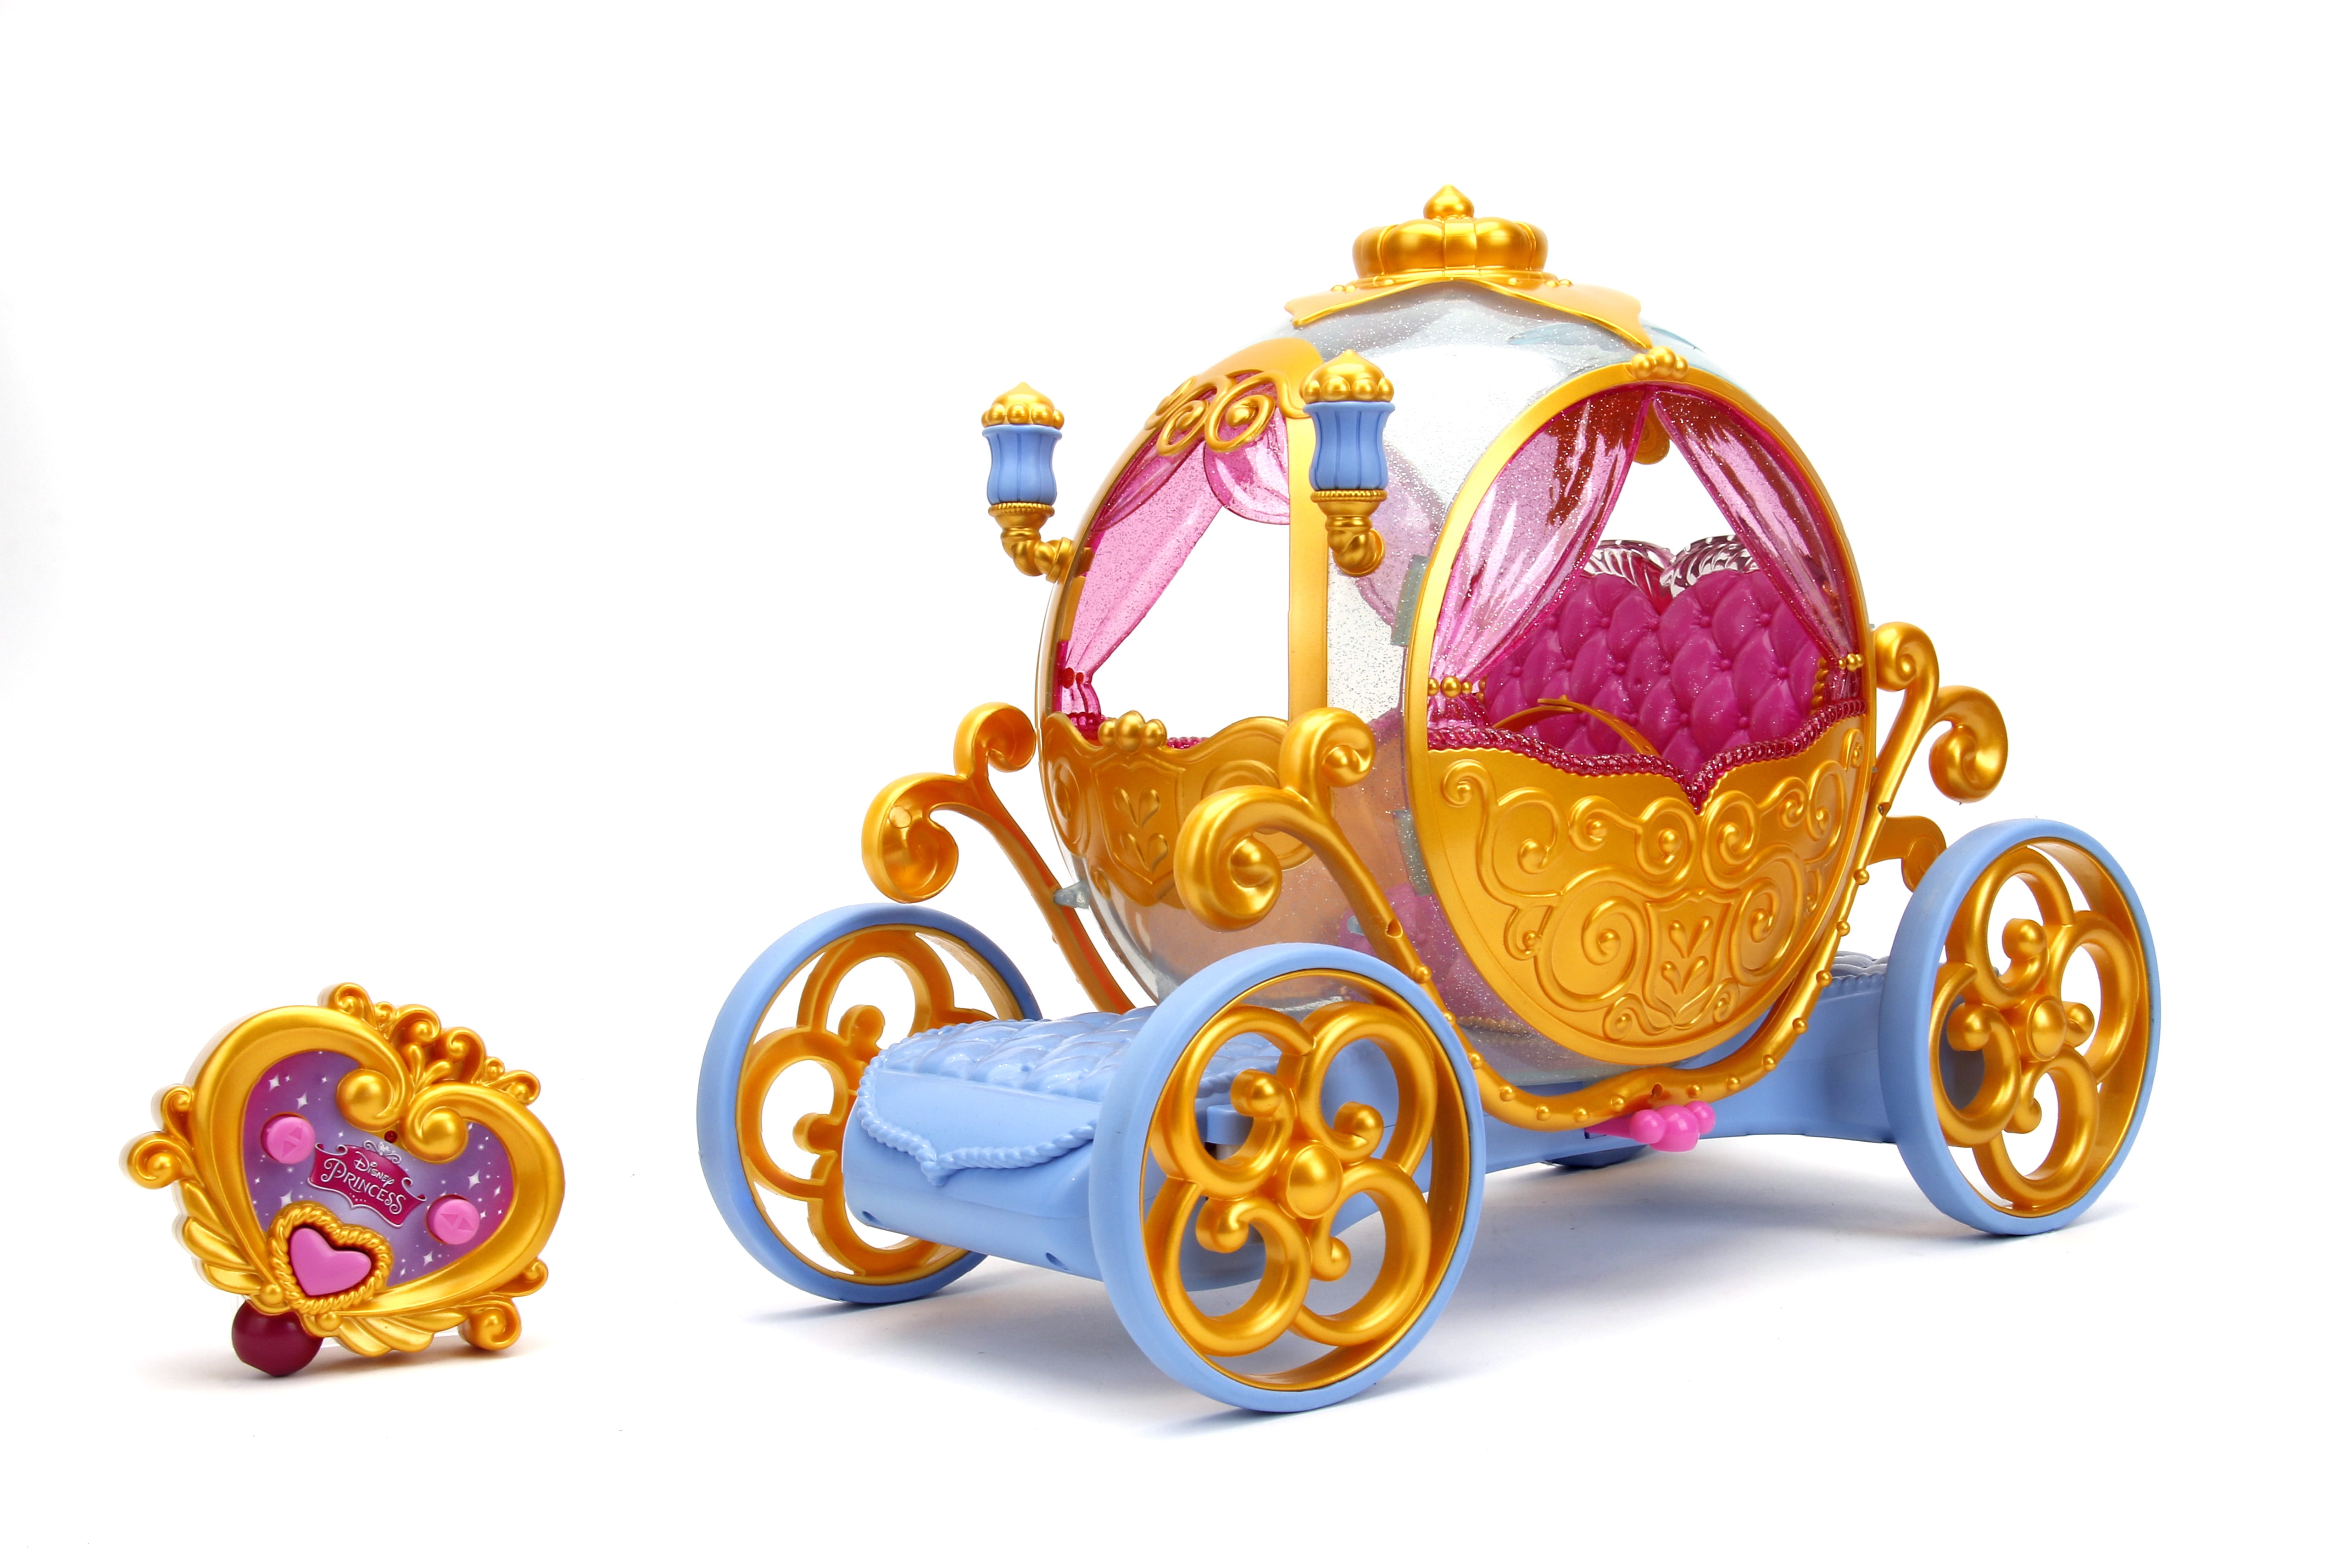 1044 FUNKO POP Disney : Stitch with Ukulele diamond glitter (EE exclus —  D.ESHOP CO.